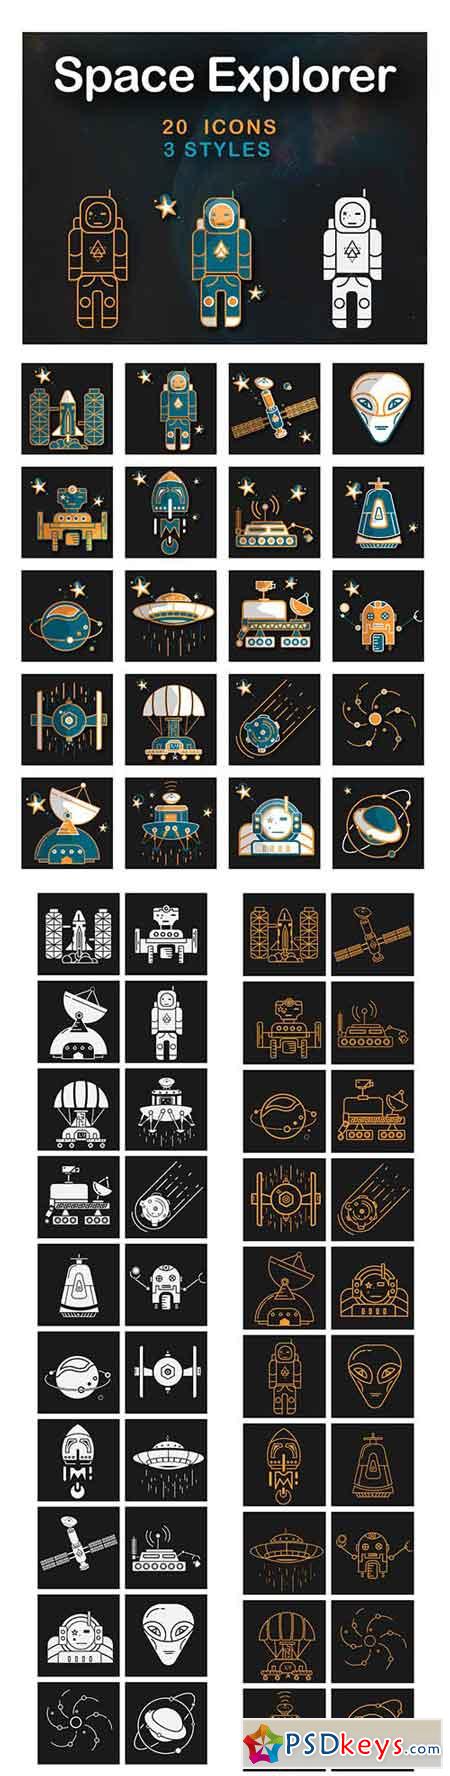 Space Explorer Icons